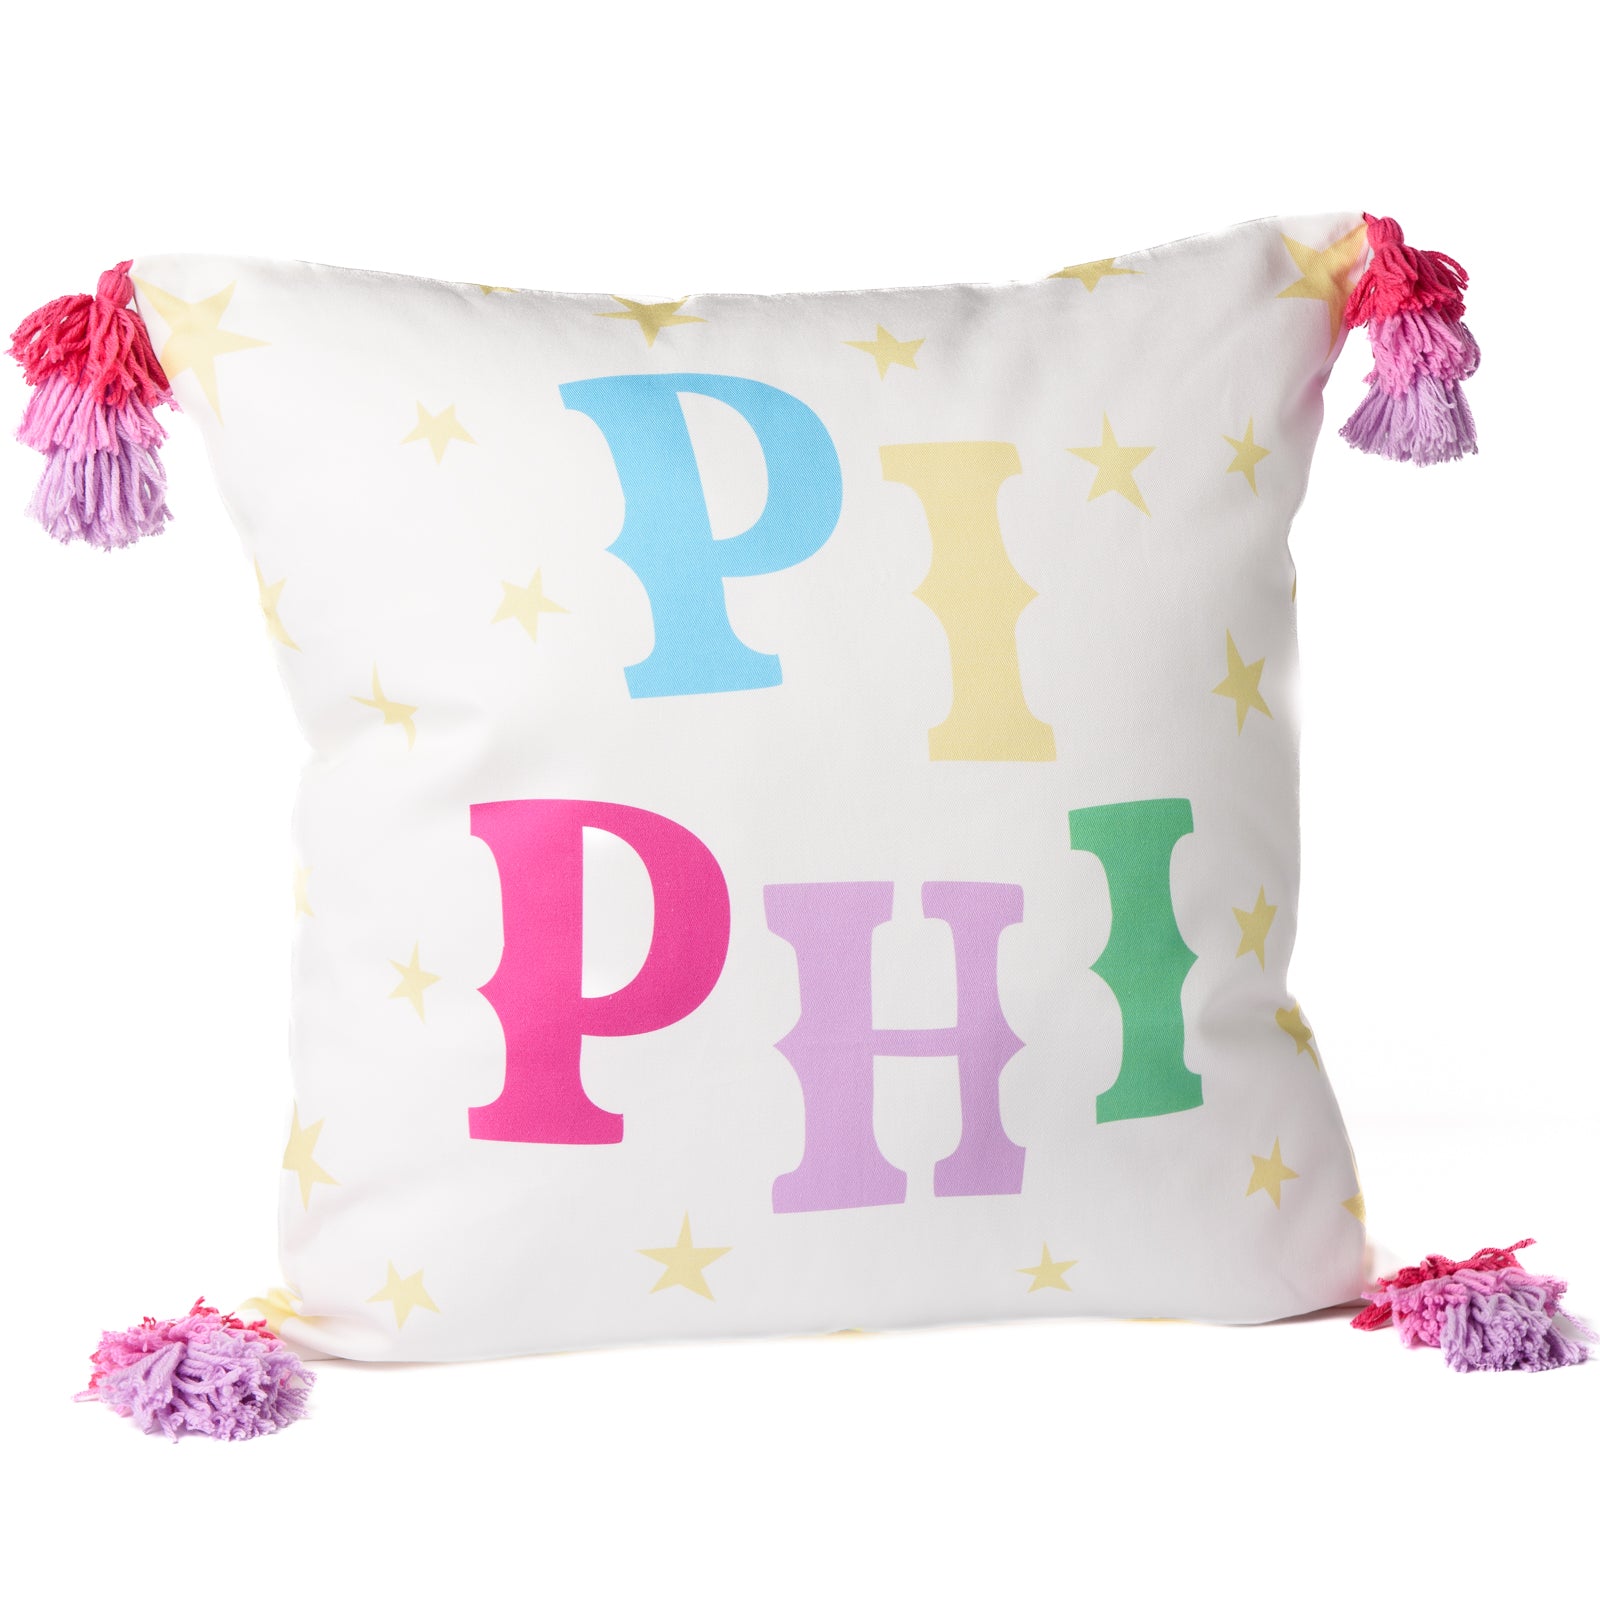 PI PHI "Oh My Stars" Printed Pillow